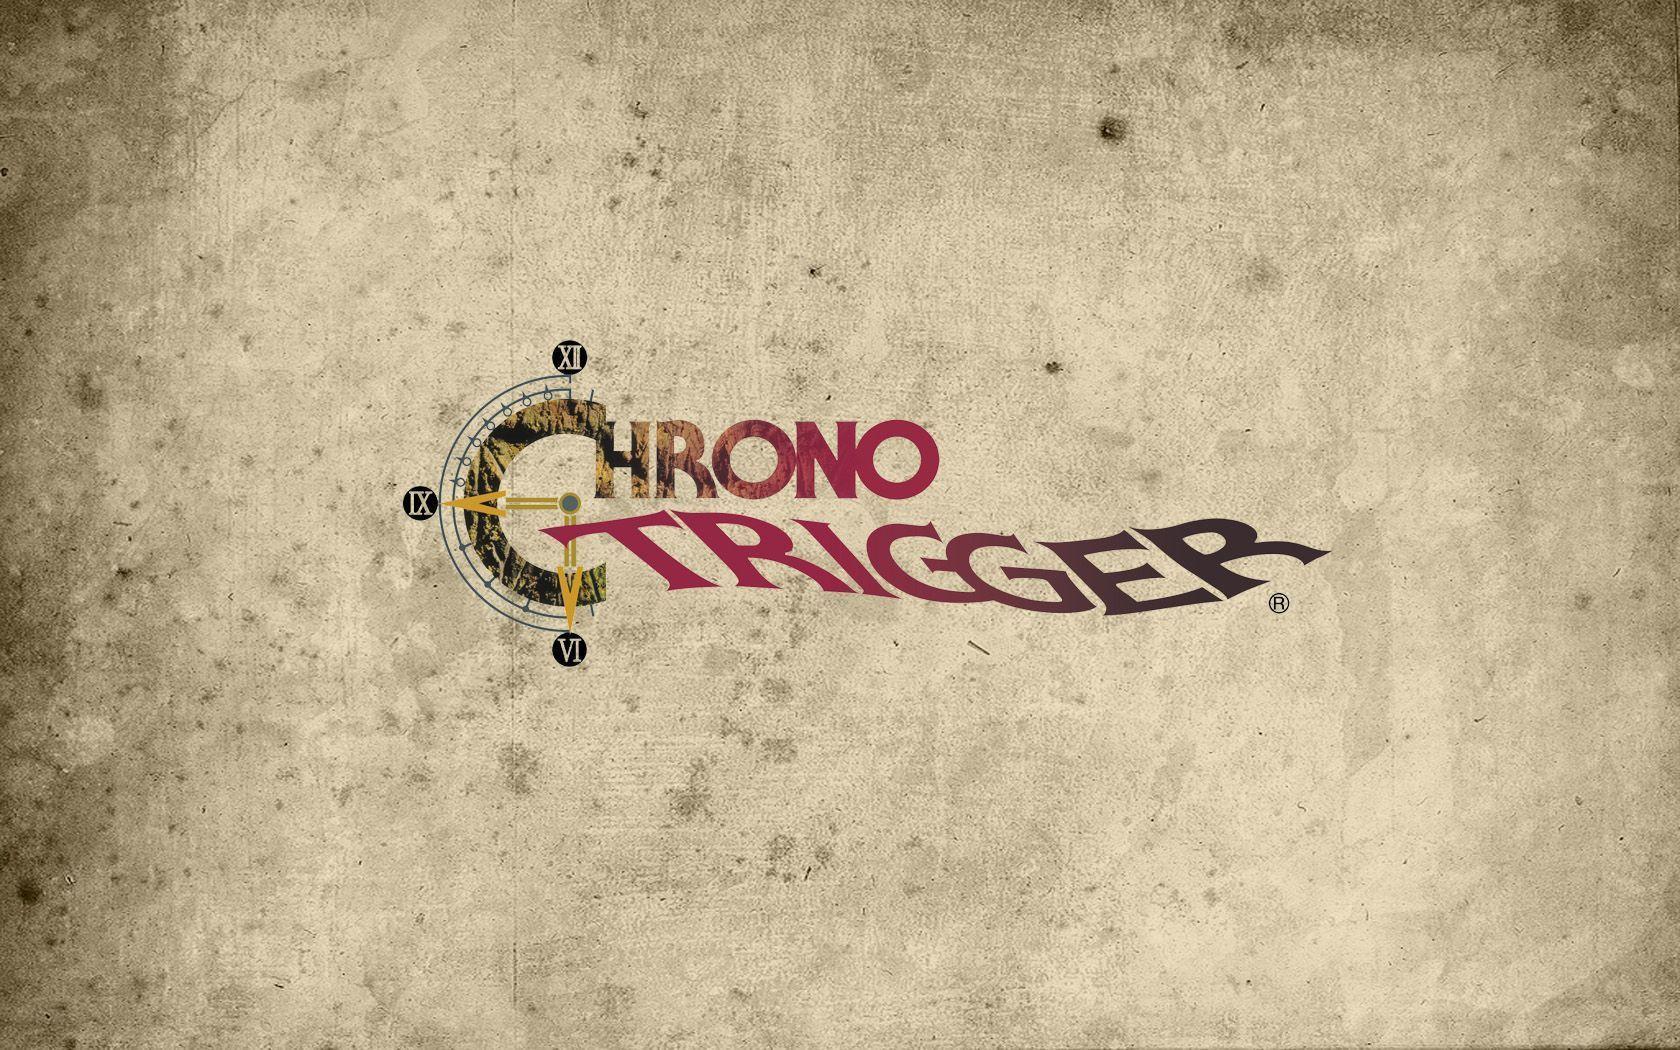 My Chrono Trigger Wallpaper